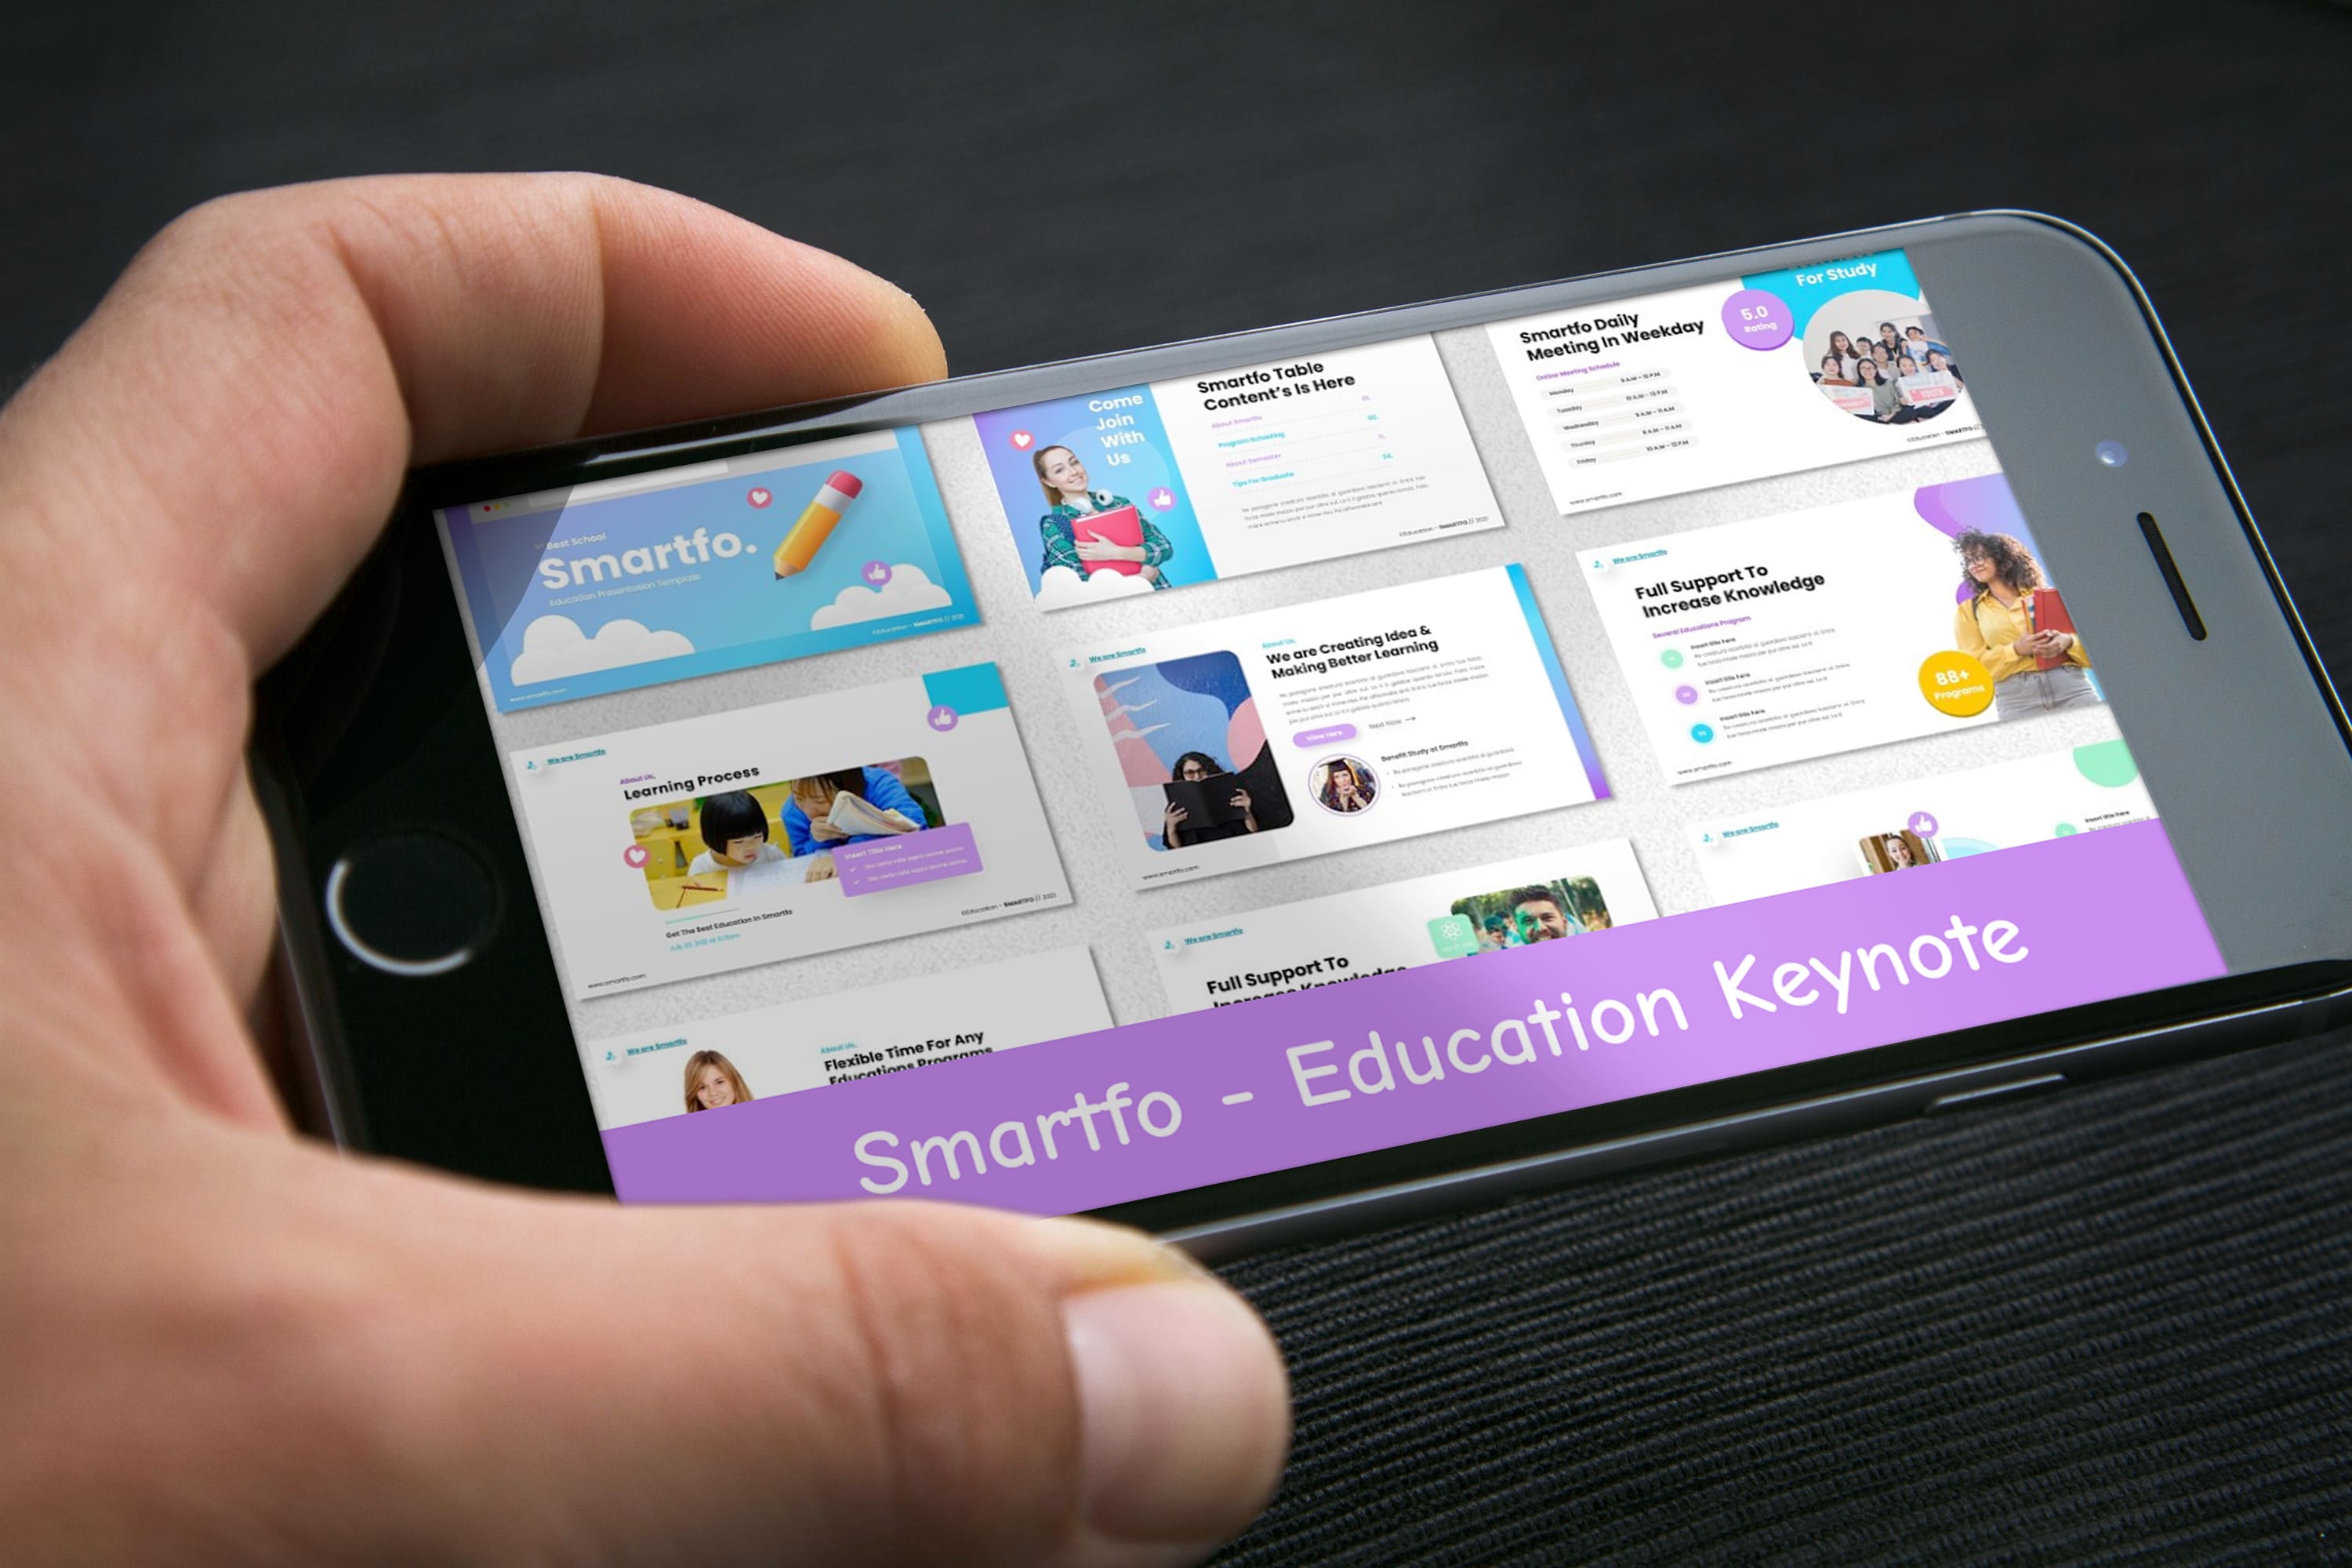 Smartfo - Education Keynote - Mockup on Smartphone.